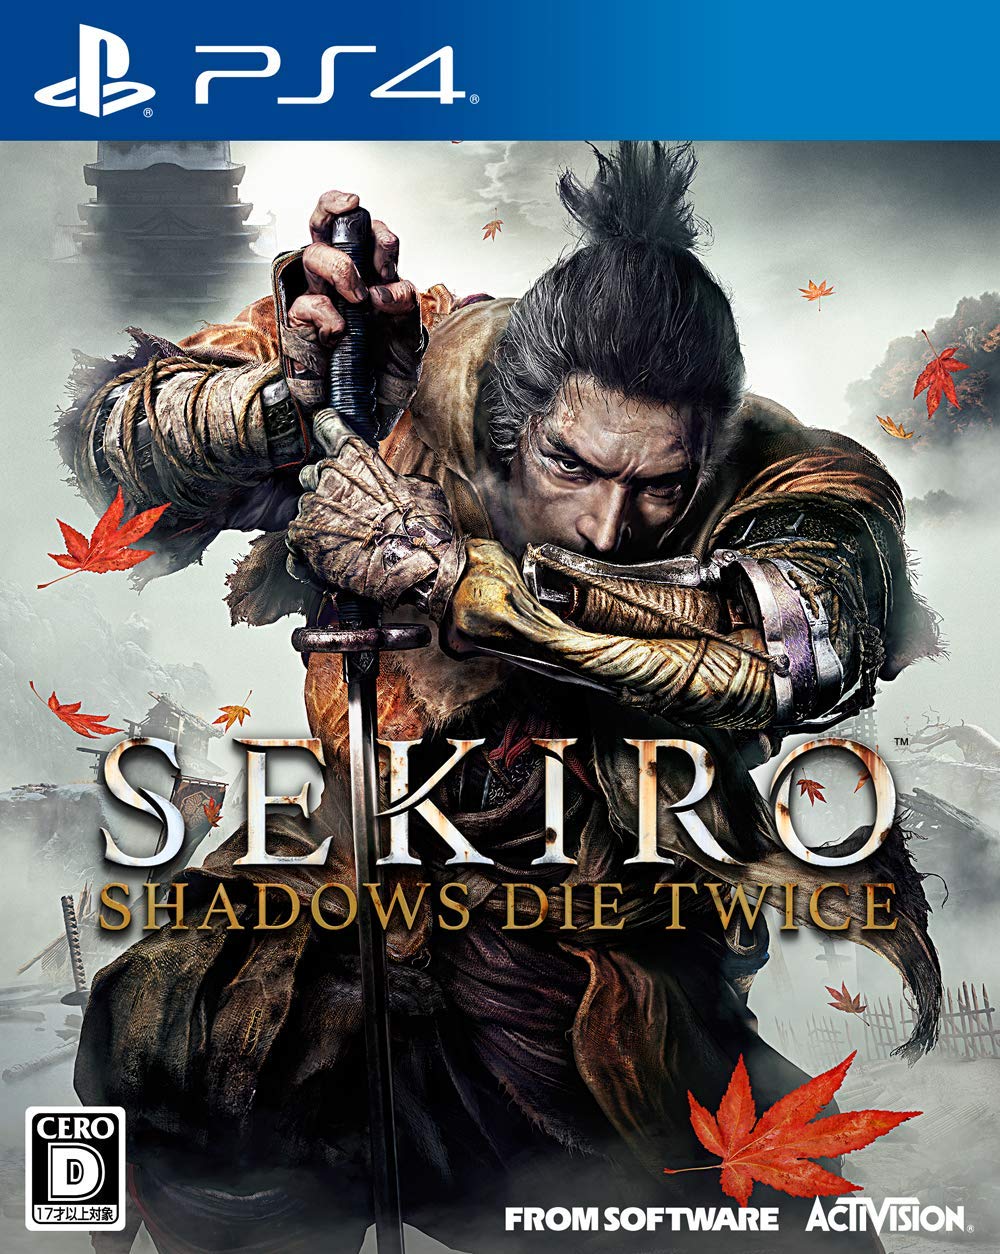 sekiro shadows die twice pre order